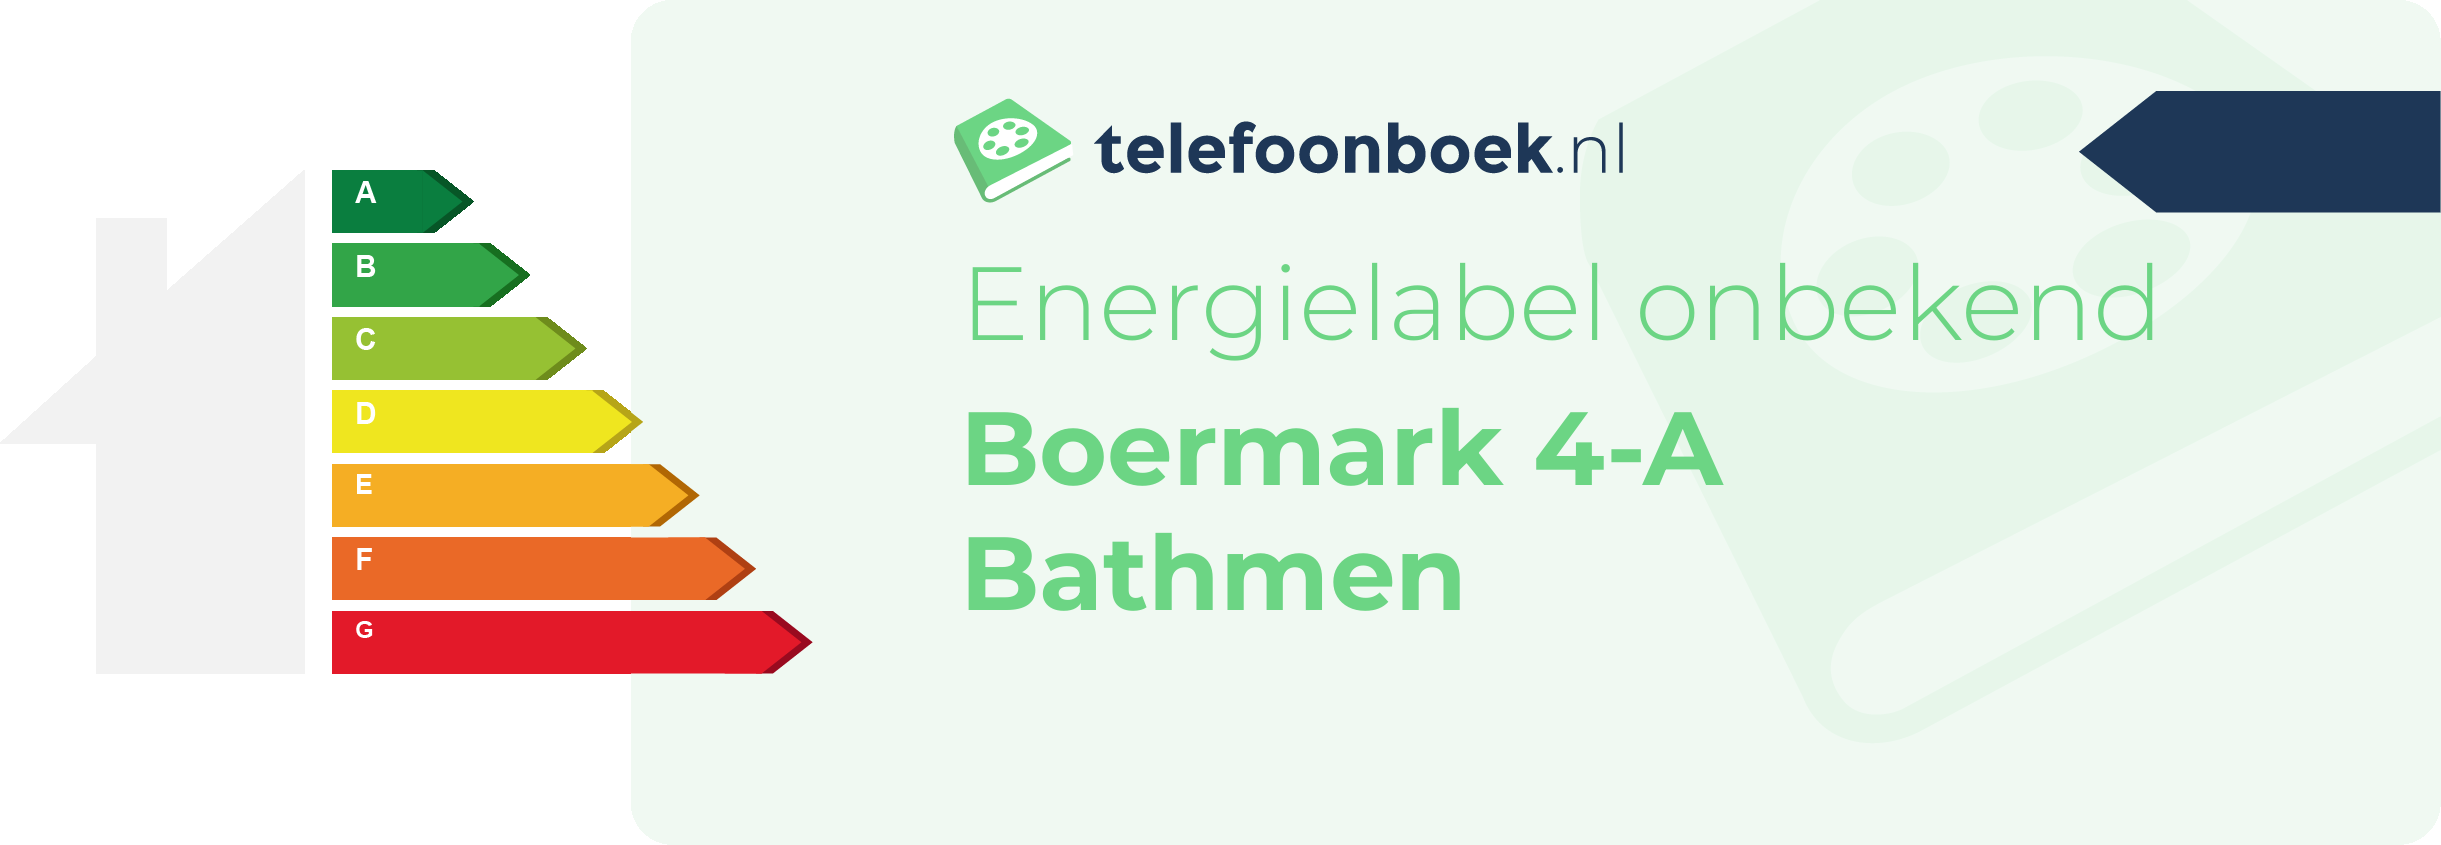 Energielabel Boermark 4-A Bathmen